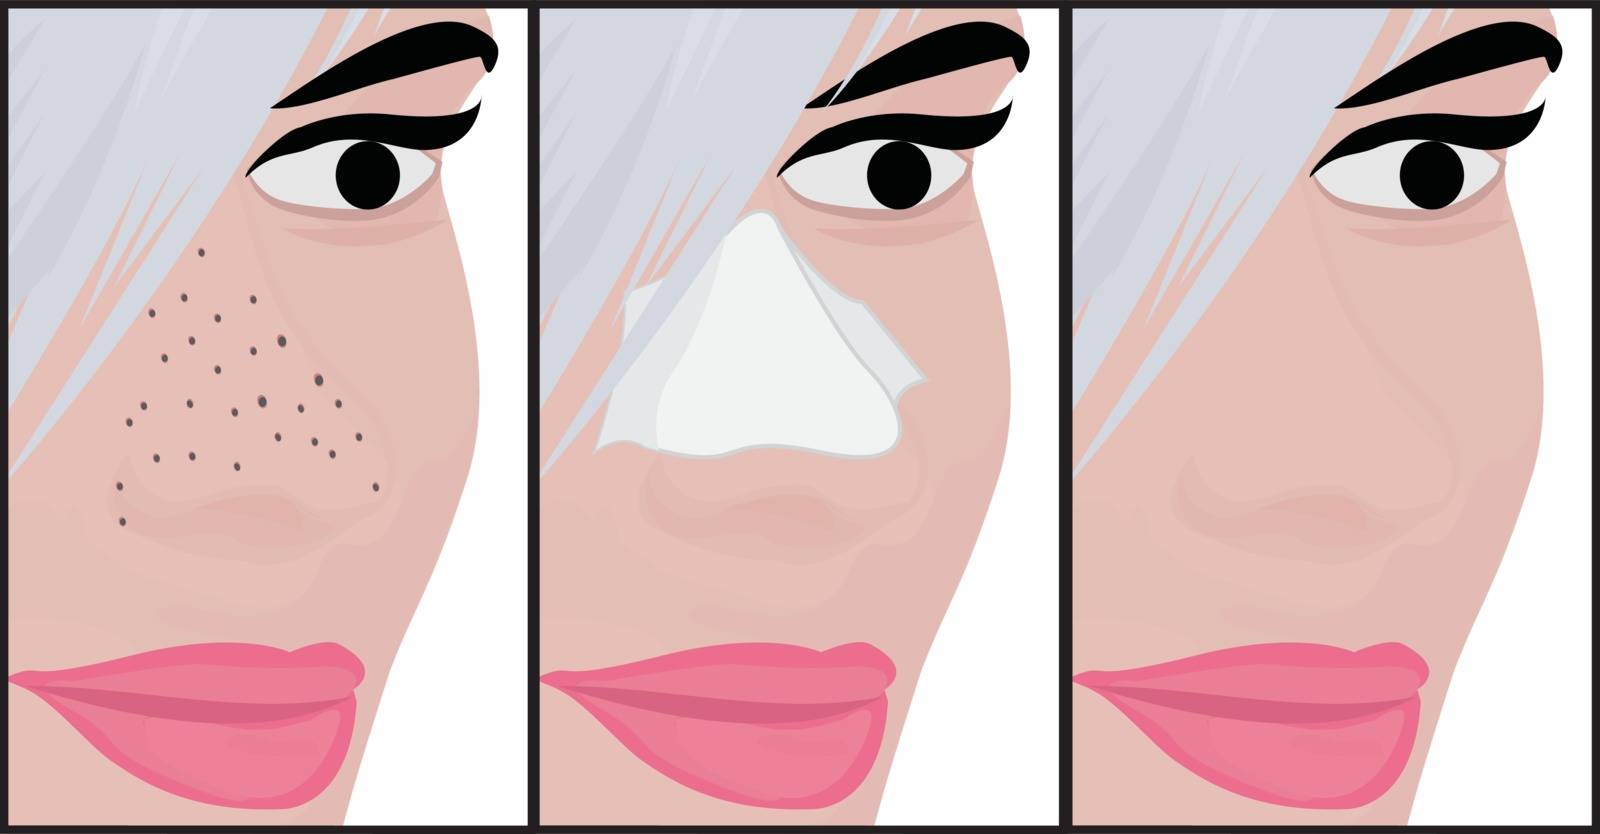 Blackheads on Nose vector illustration showing skin problems